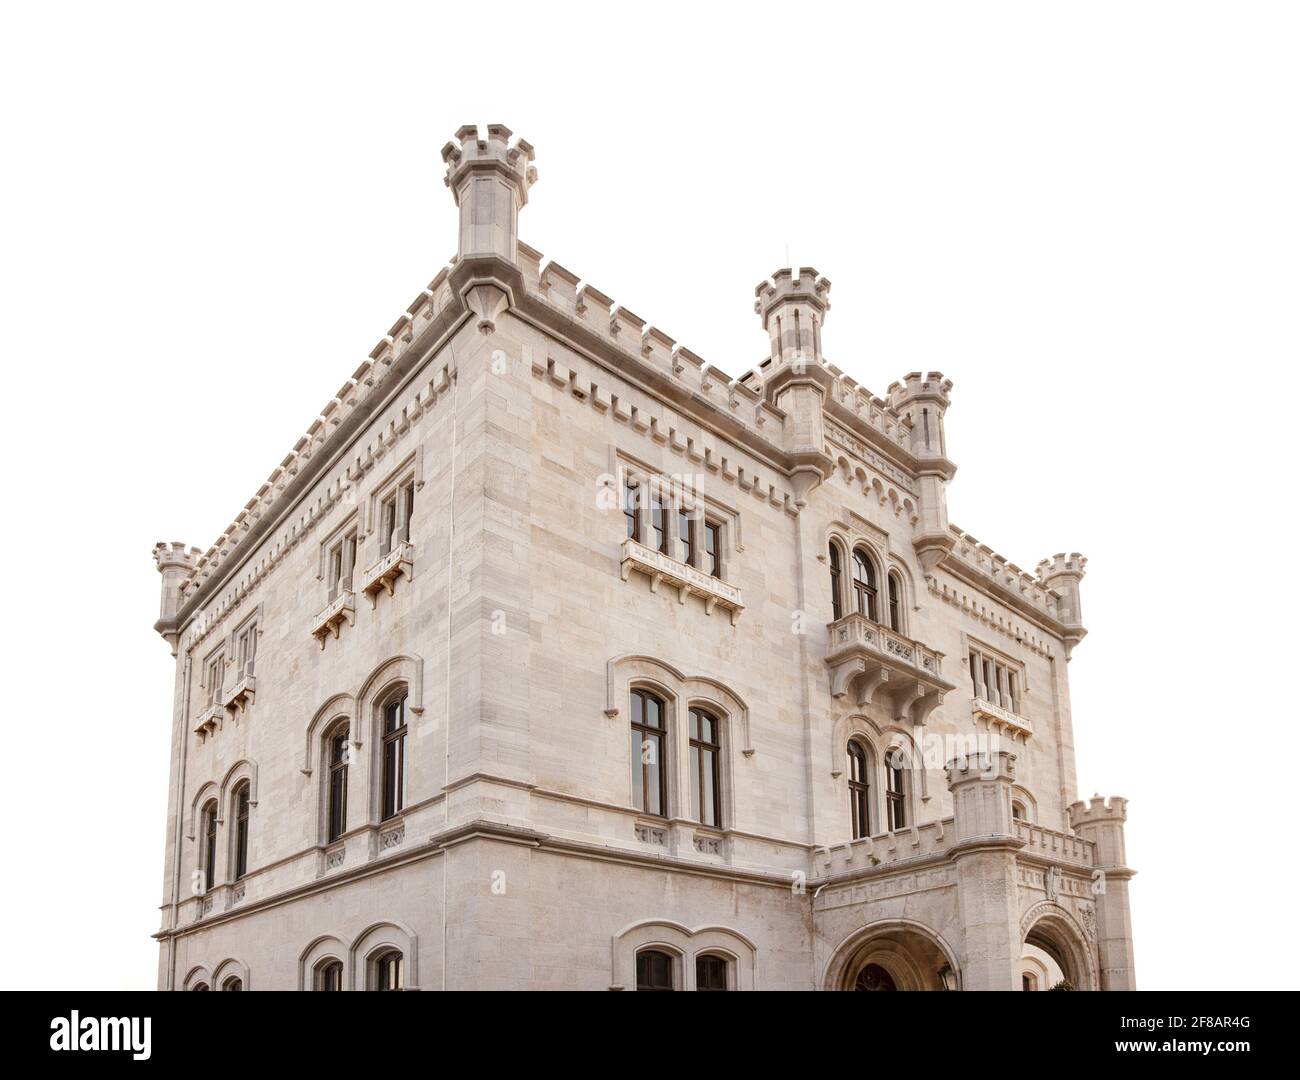 Miramare Castle of House of Habsburg near Trieste, Italy, Europe Stock Photo